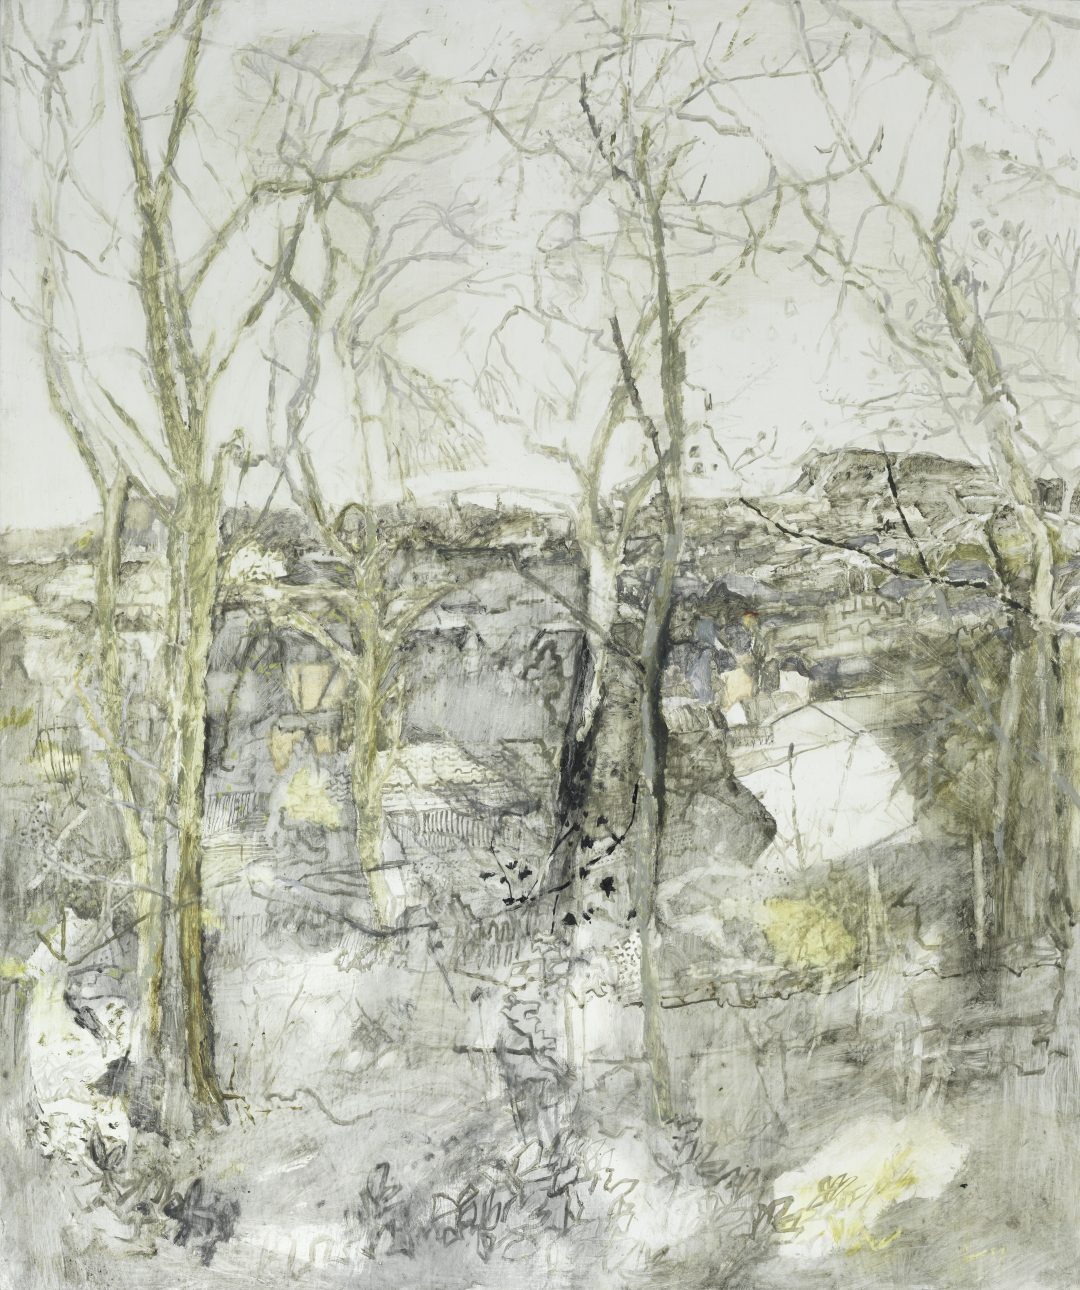 Chasing Shadows, (from Blackford Hill) Catharine Davison Oil on Board, 76 x 63 cm